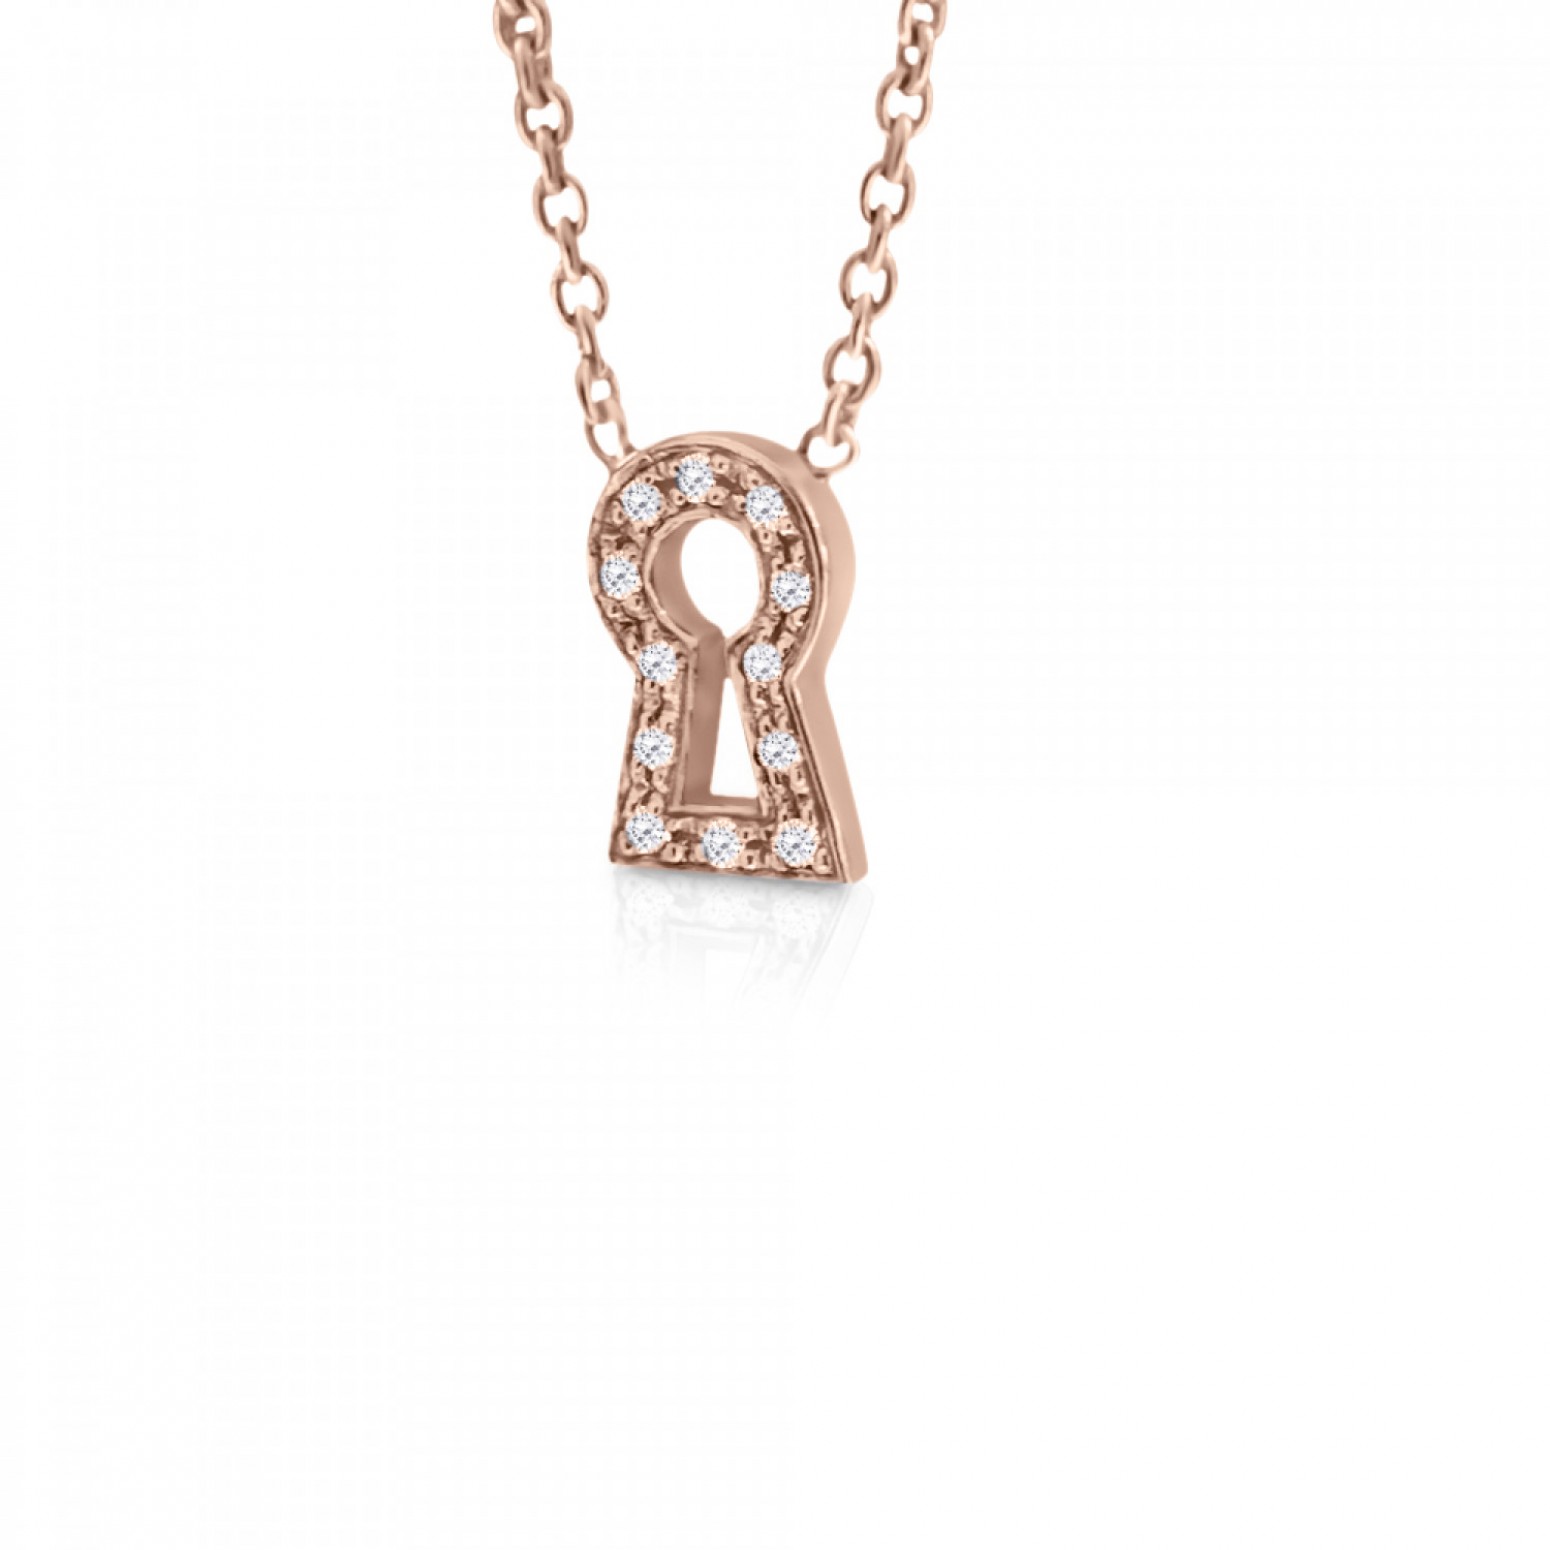 Lock necklace, Κ14 pink gold with zircon, ko1704 NECKLACES Κοσμηματα - chrilia.gr